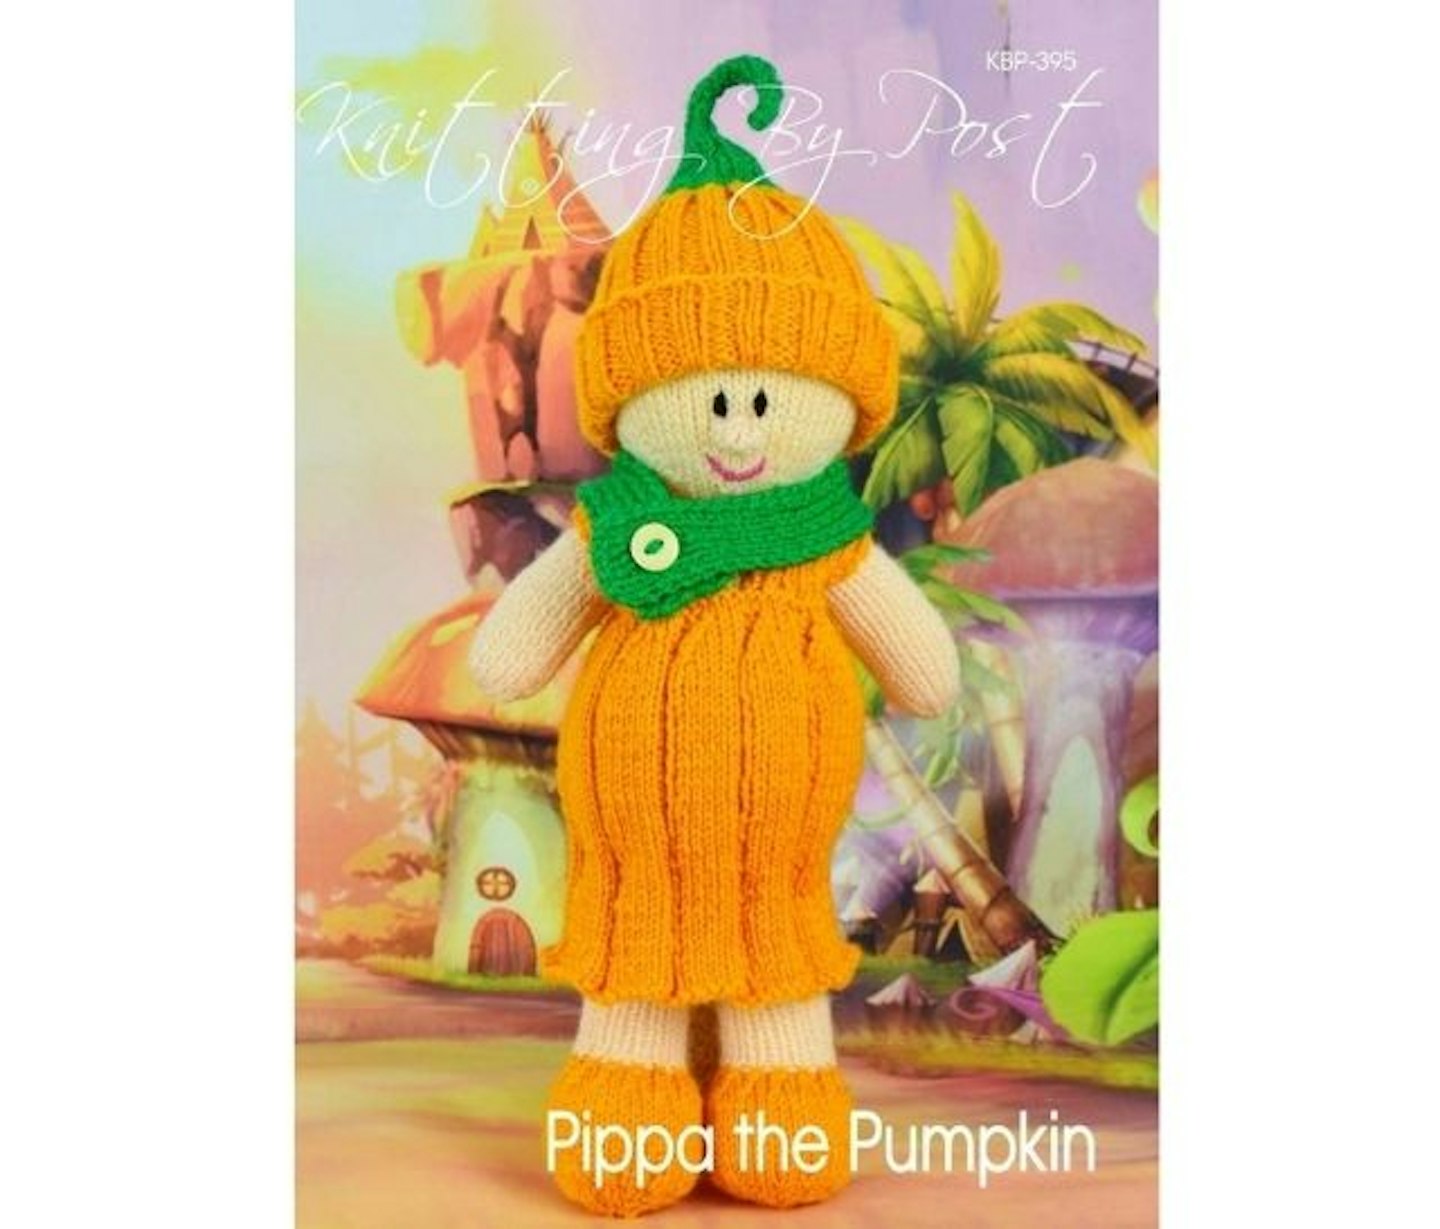 Pippa the Pumpkin 1970s toys